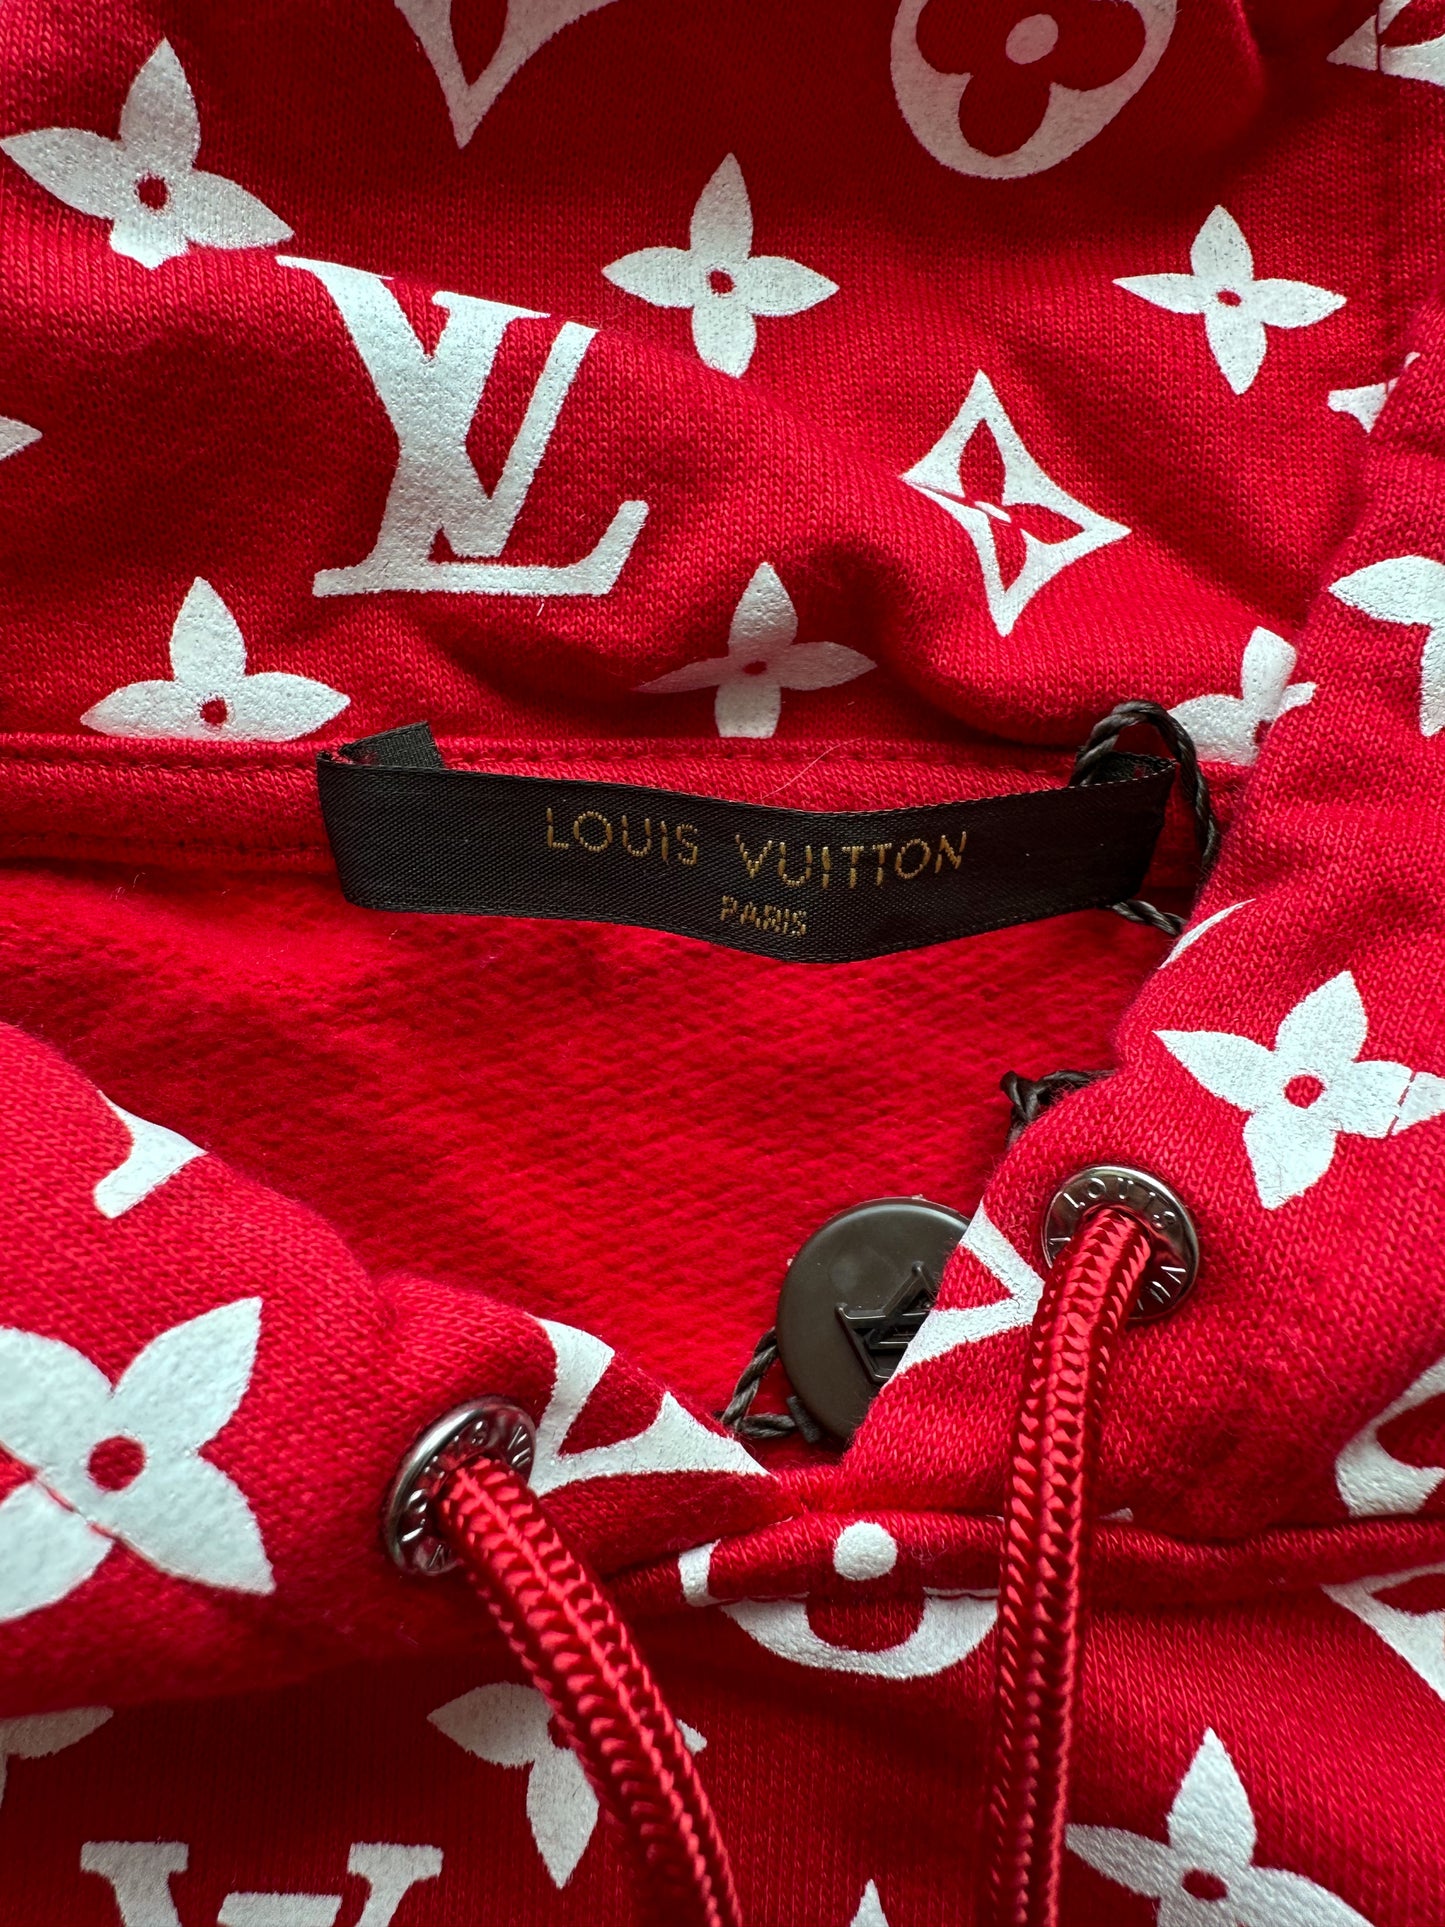 Louis Vuitton Supreme Red Black Luxury Brand Hoodie For Men Women